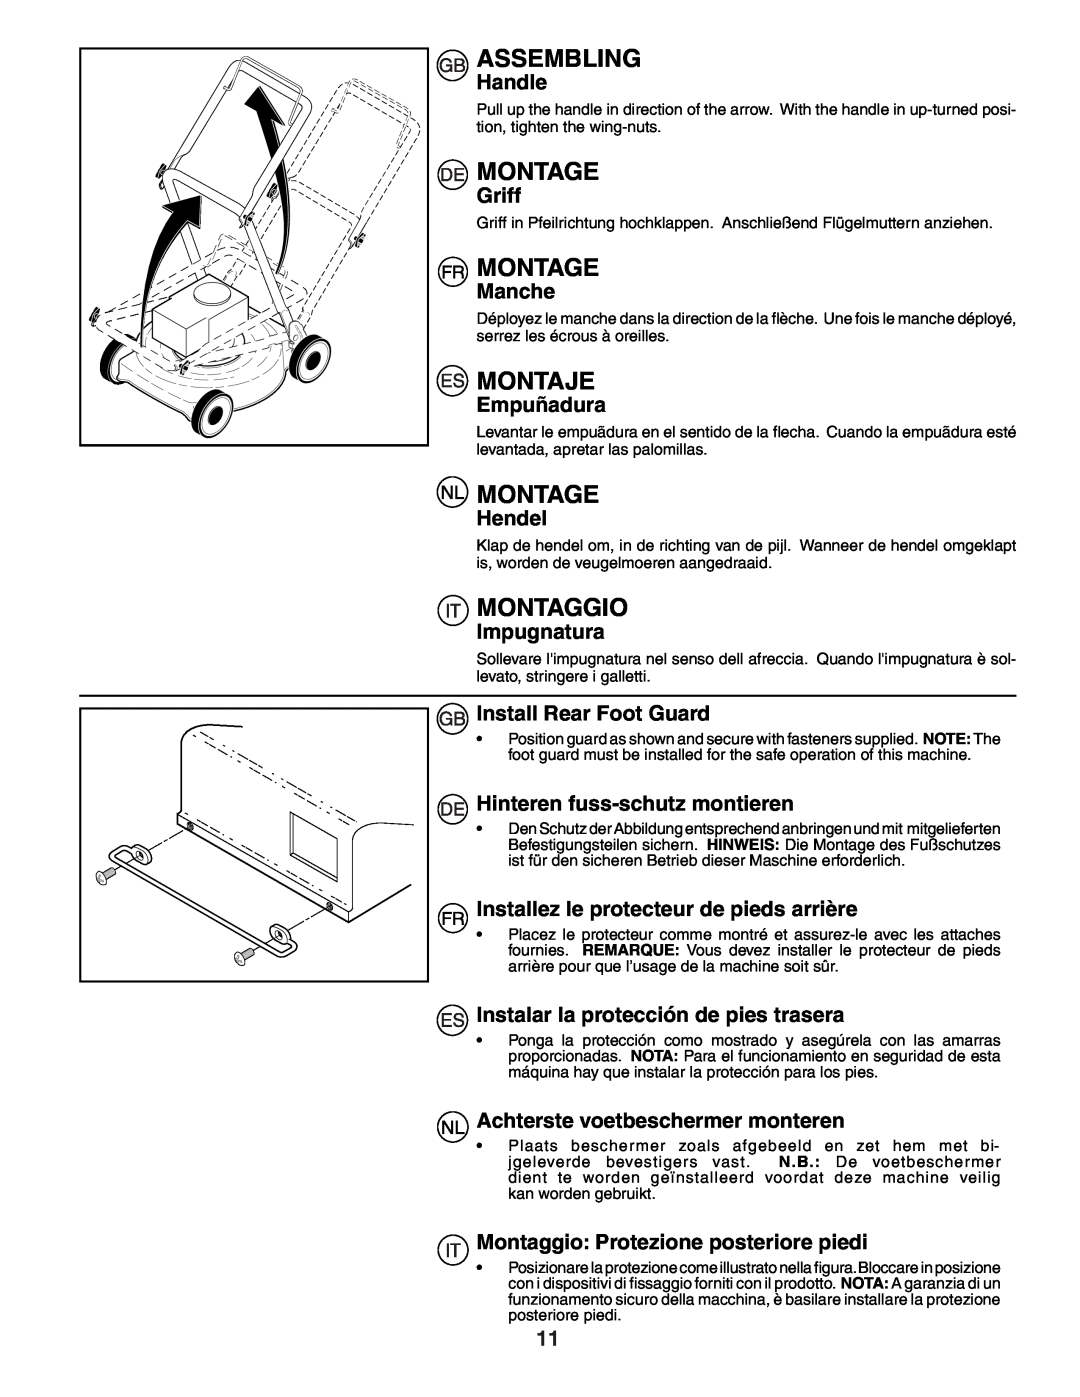 Husqvarna R53W instruction manual Assembling, Montage, Montaje, Montaggio 